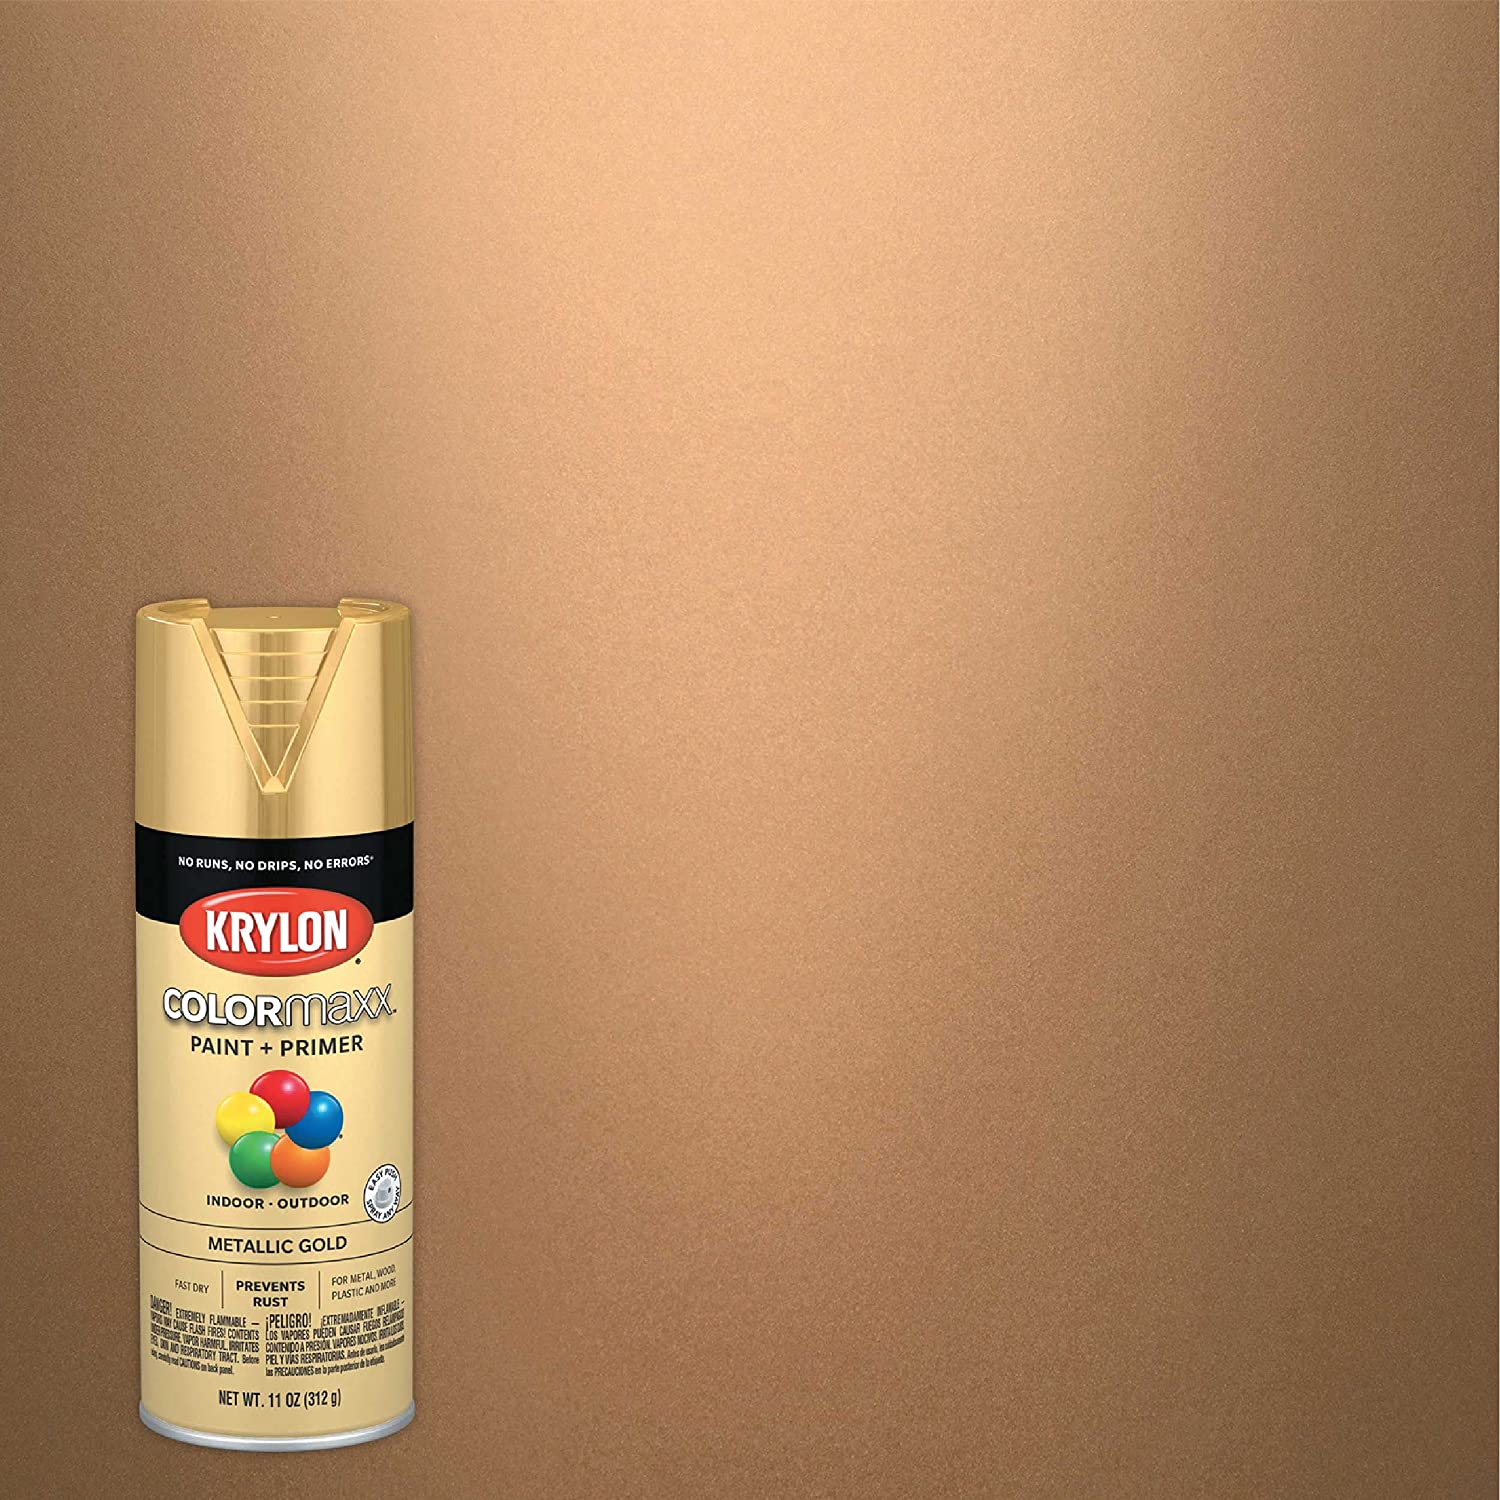 Krylon K05588007 COLORmaxx Spray Paint and Primer sampl